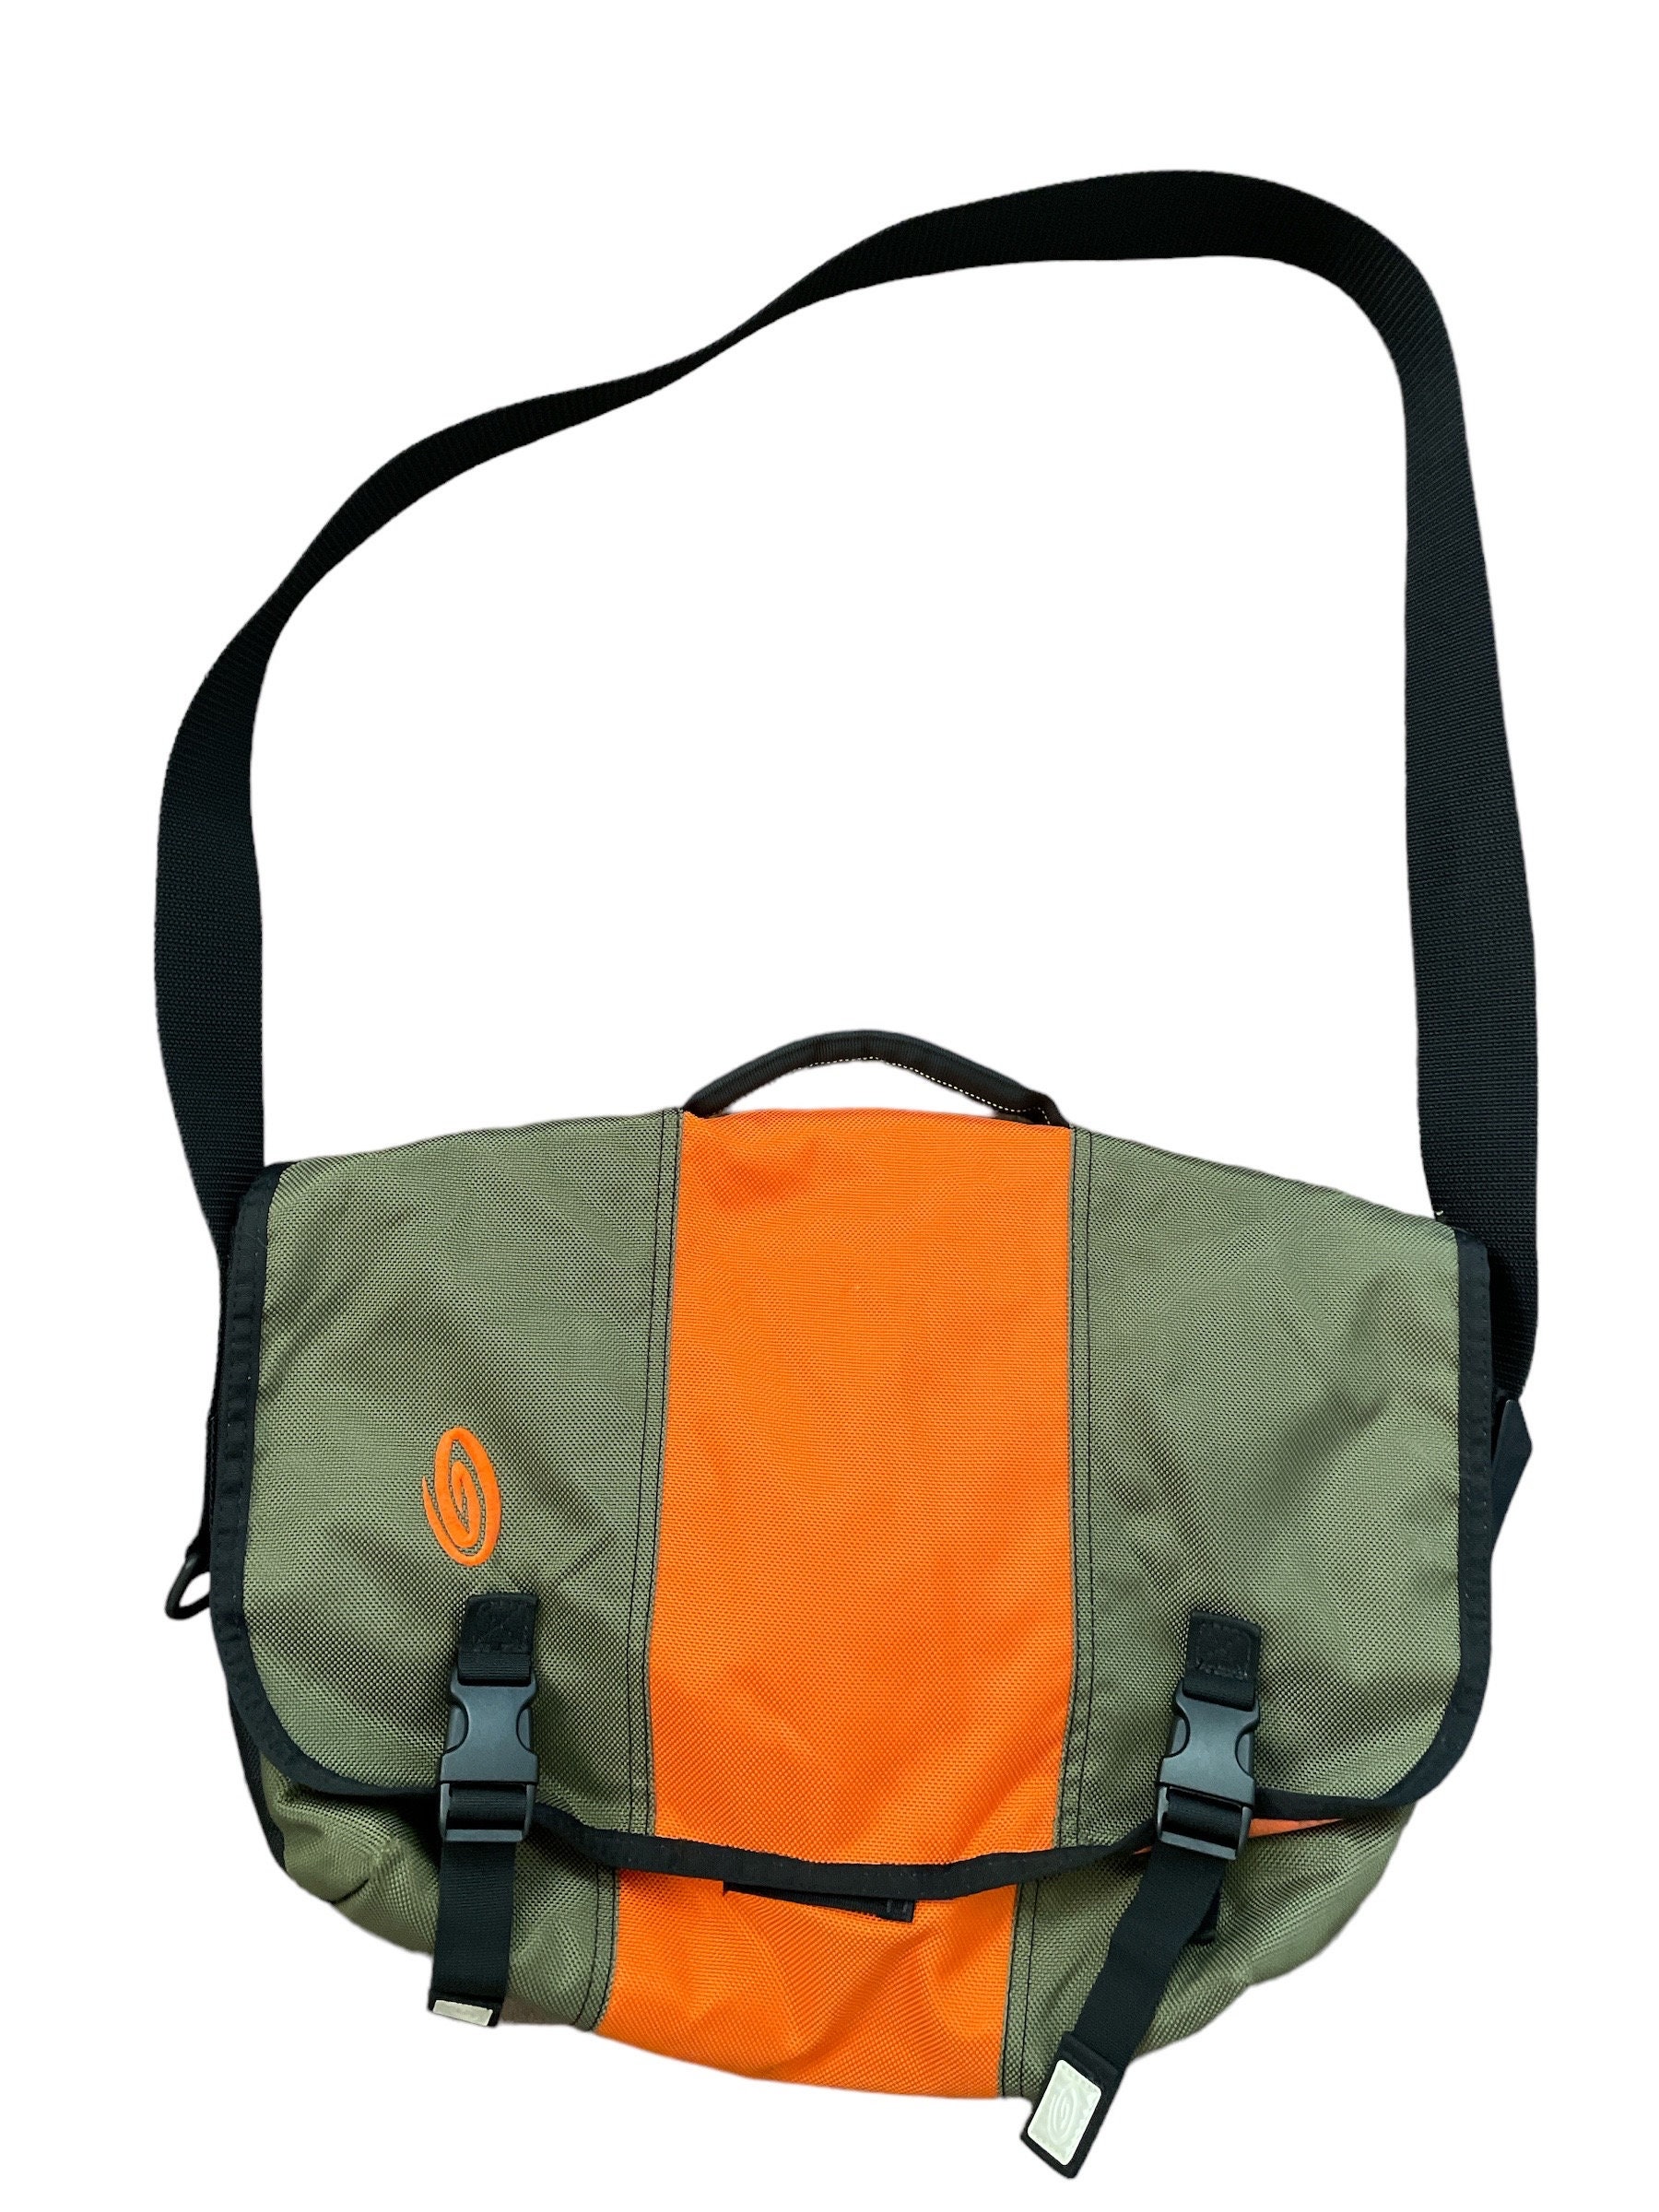 Eco Messenger Bags – Timbuk2